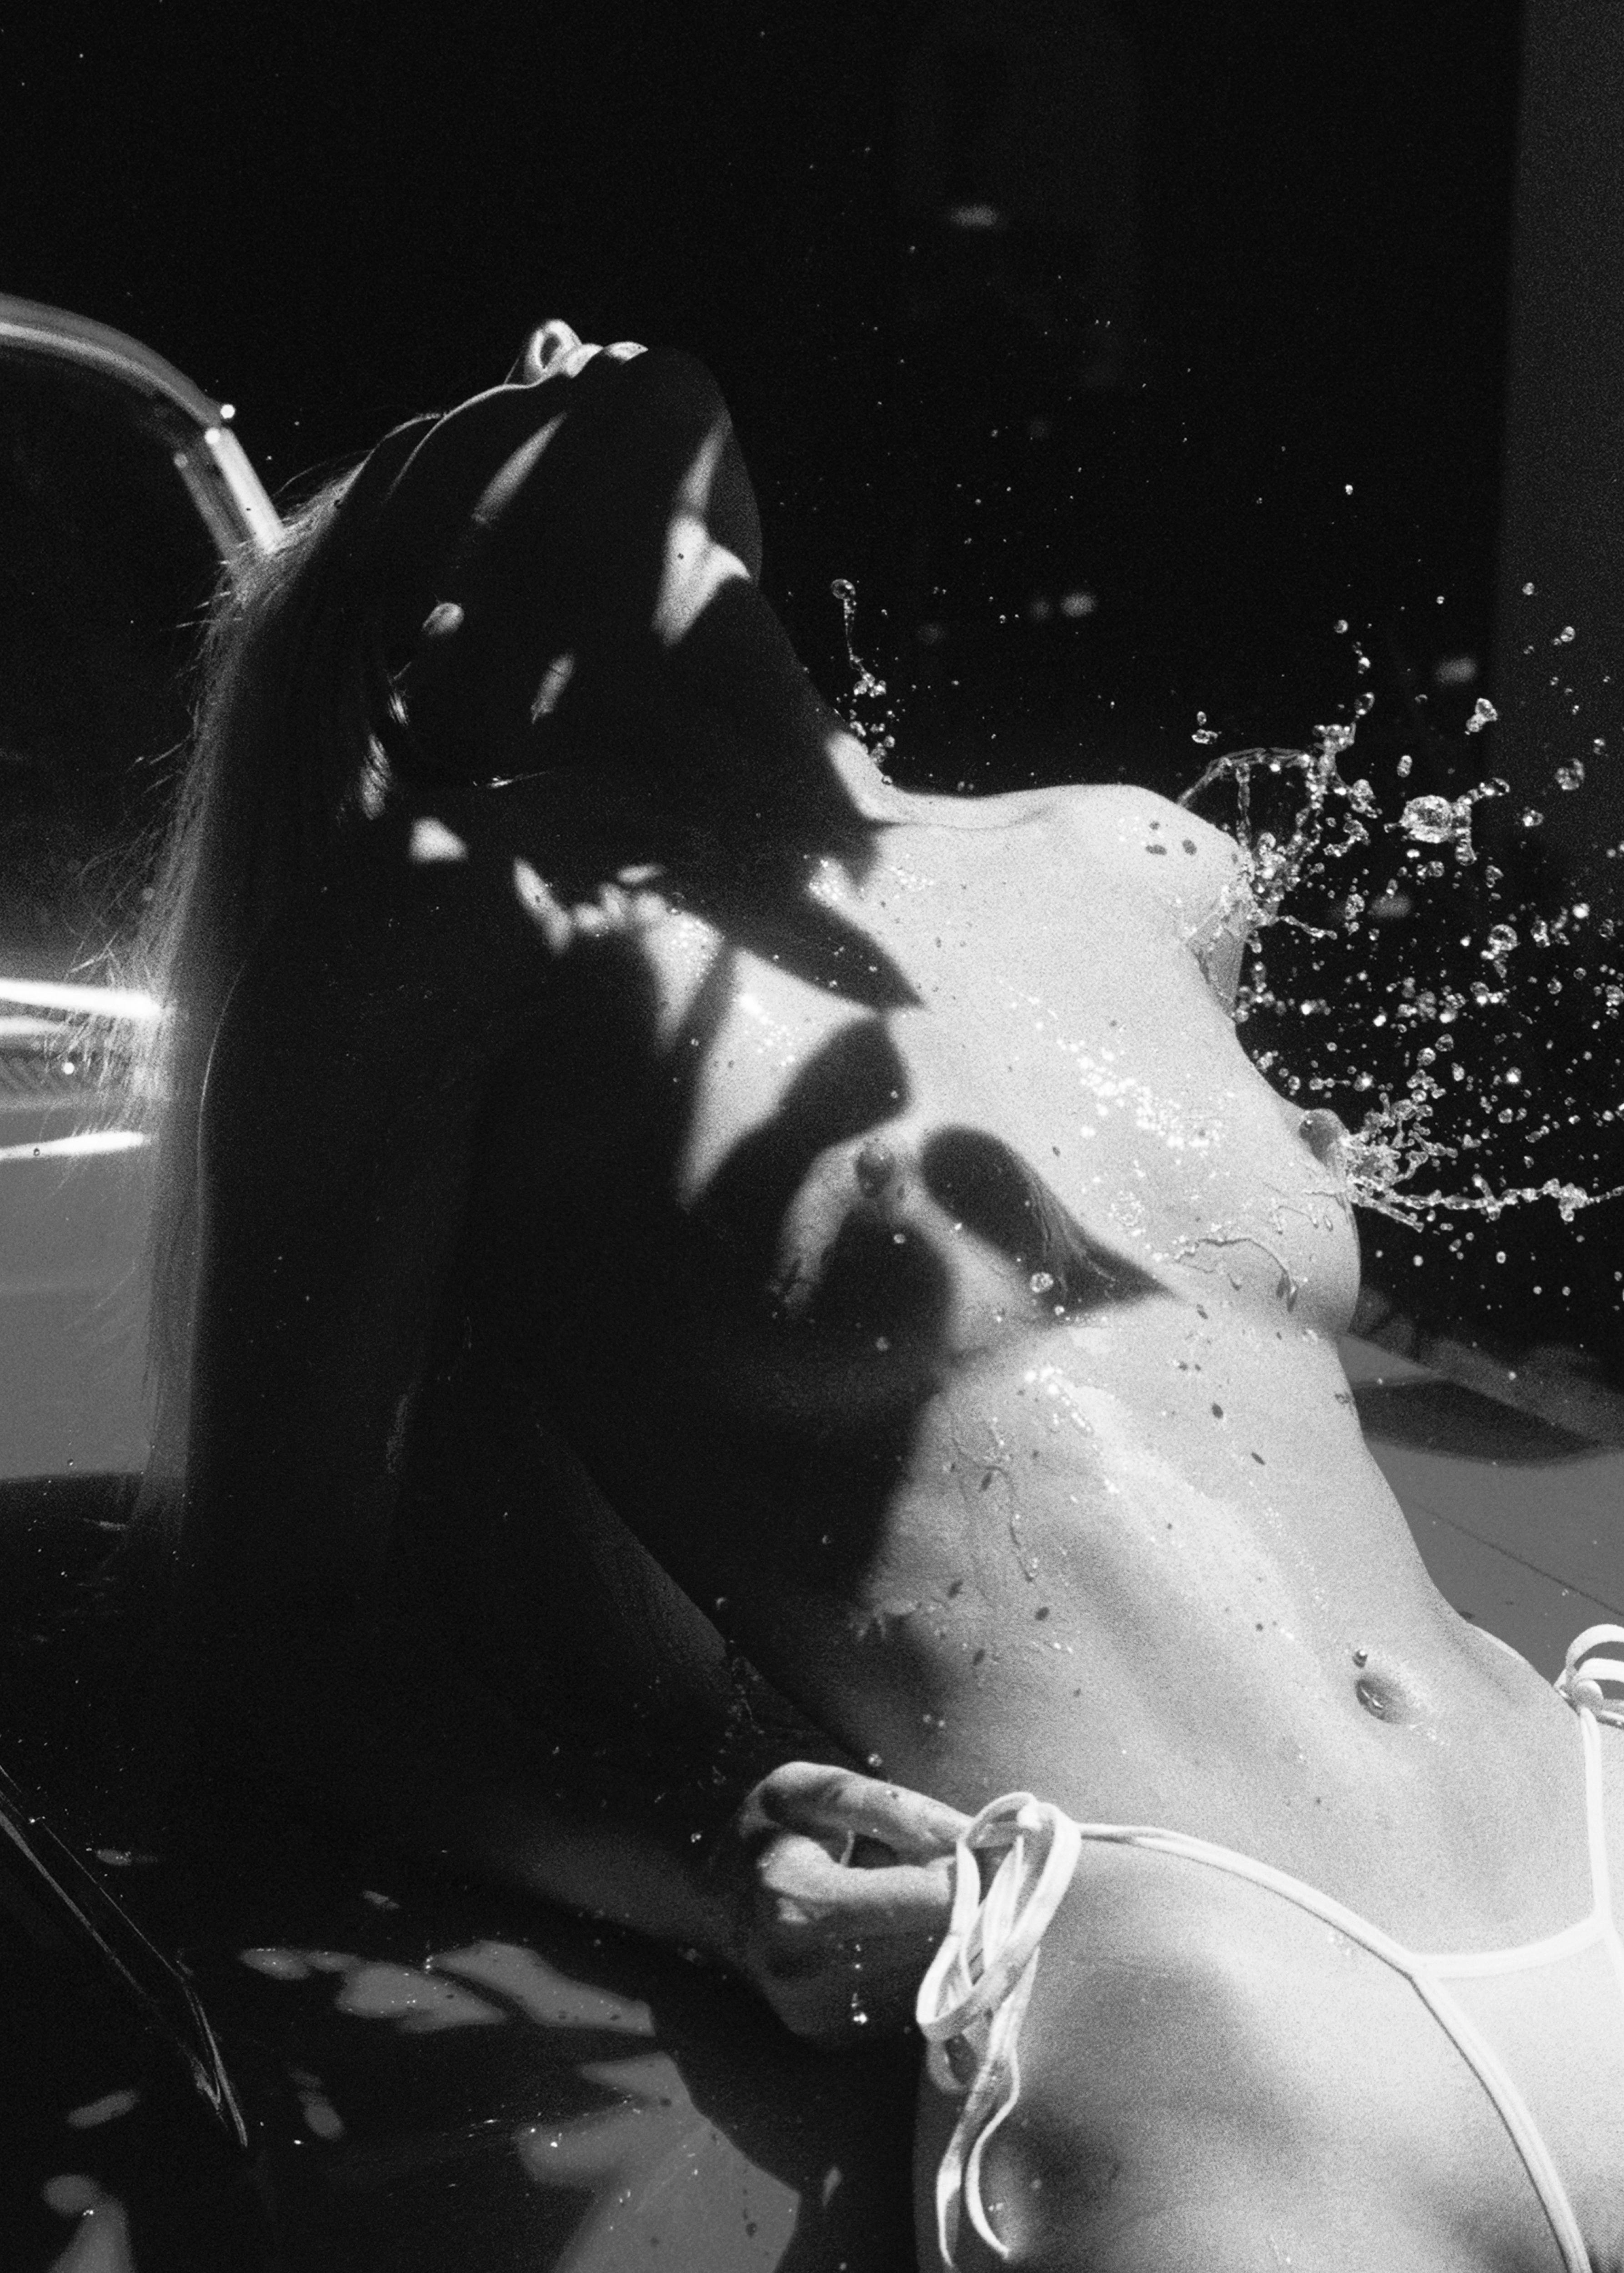 "Splash" Photography 42" x 30" in Edition 1/7 by Larsen Sotelo